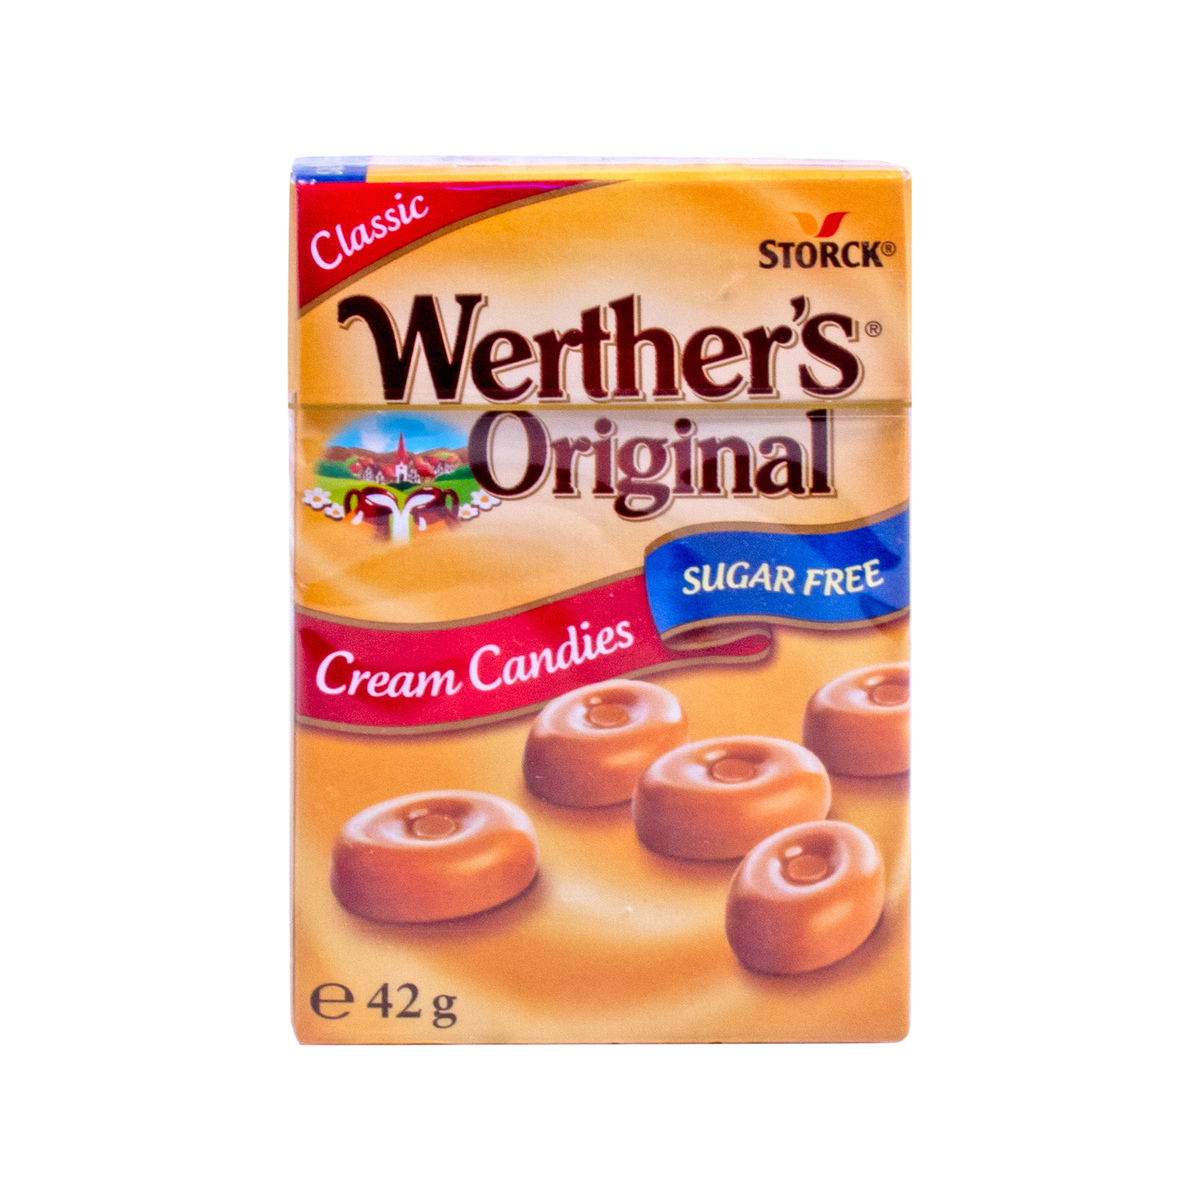 Storck Werthers Original Cream Candy Sugar Free 42g Online At Best Price Candy Lulu Egypt